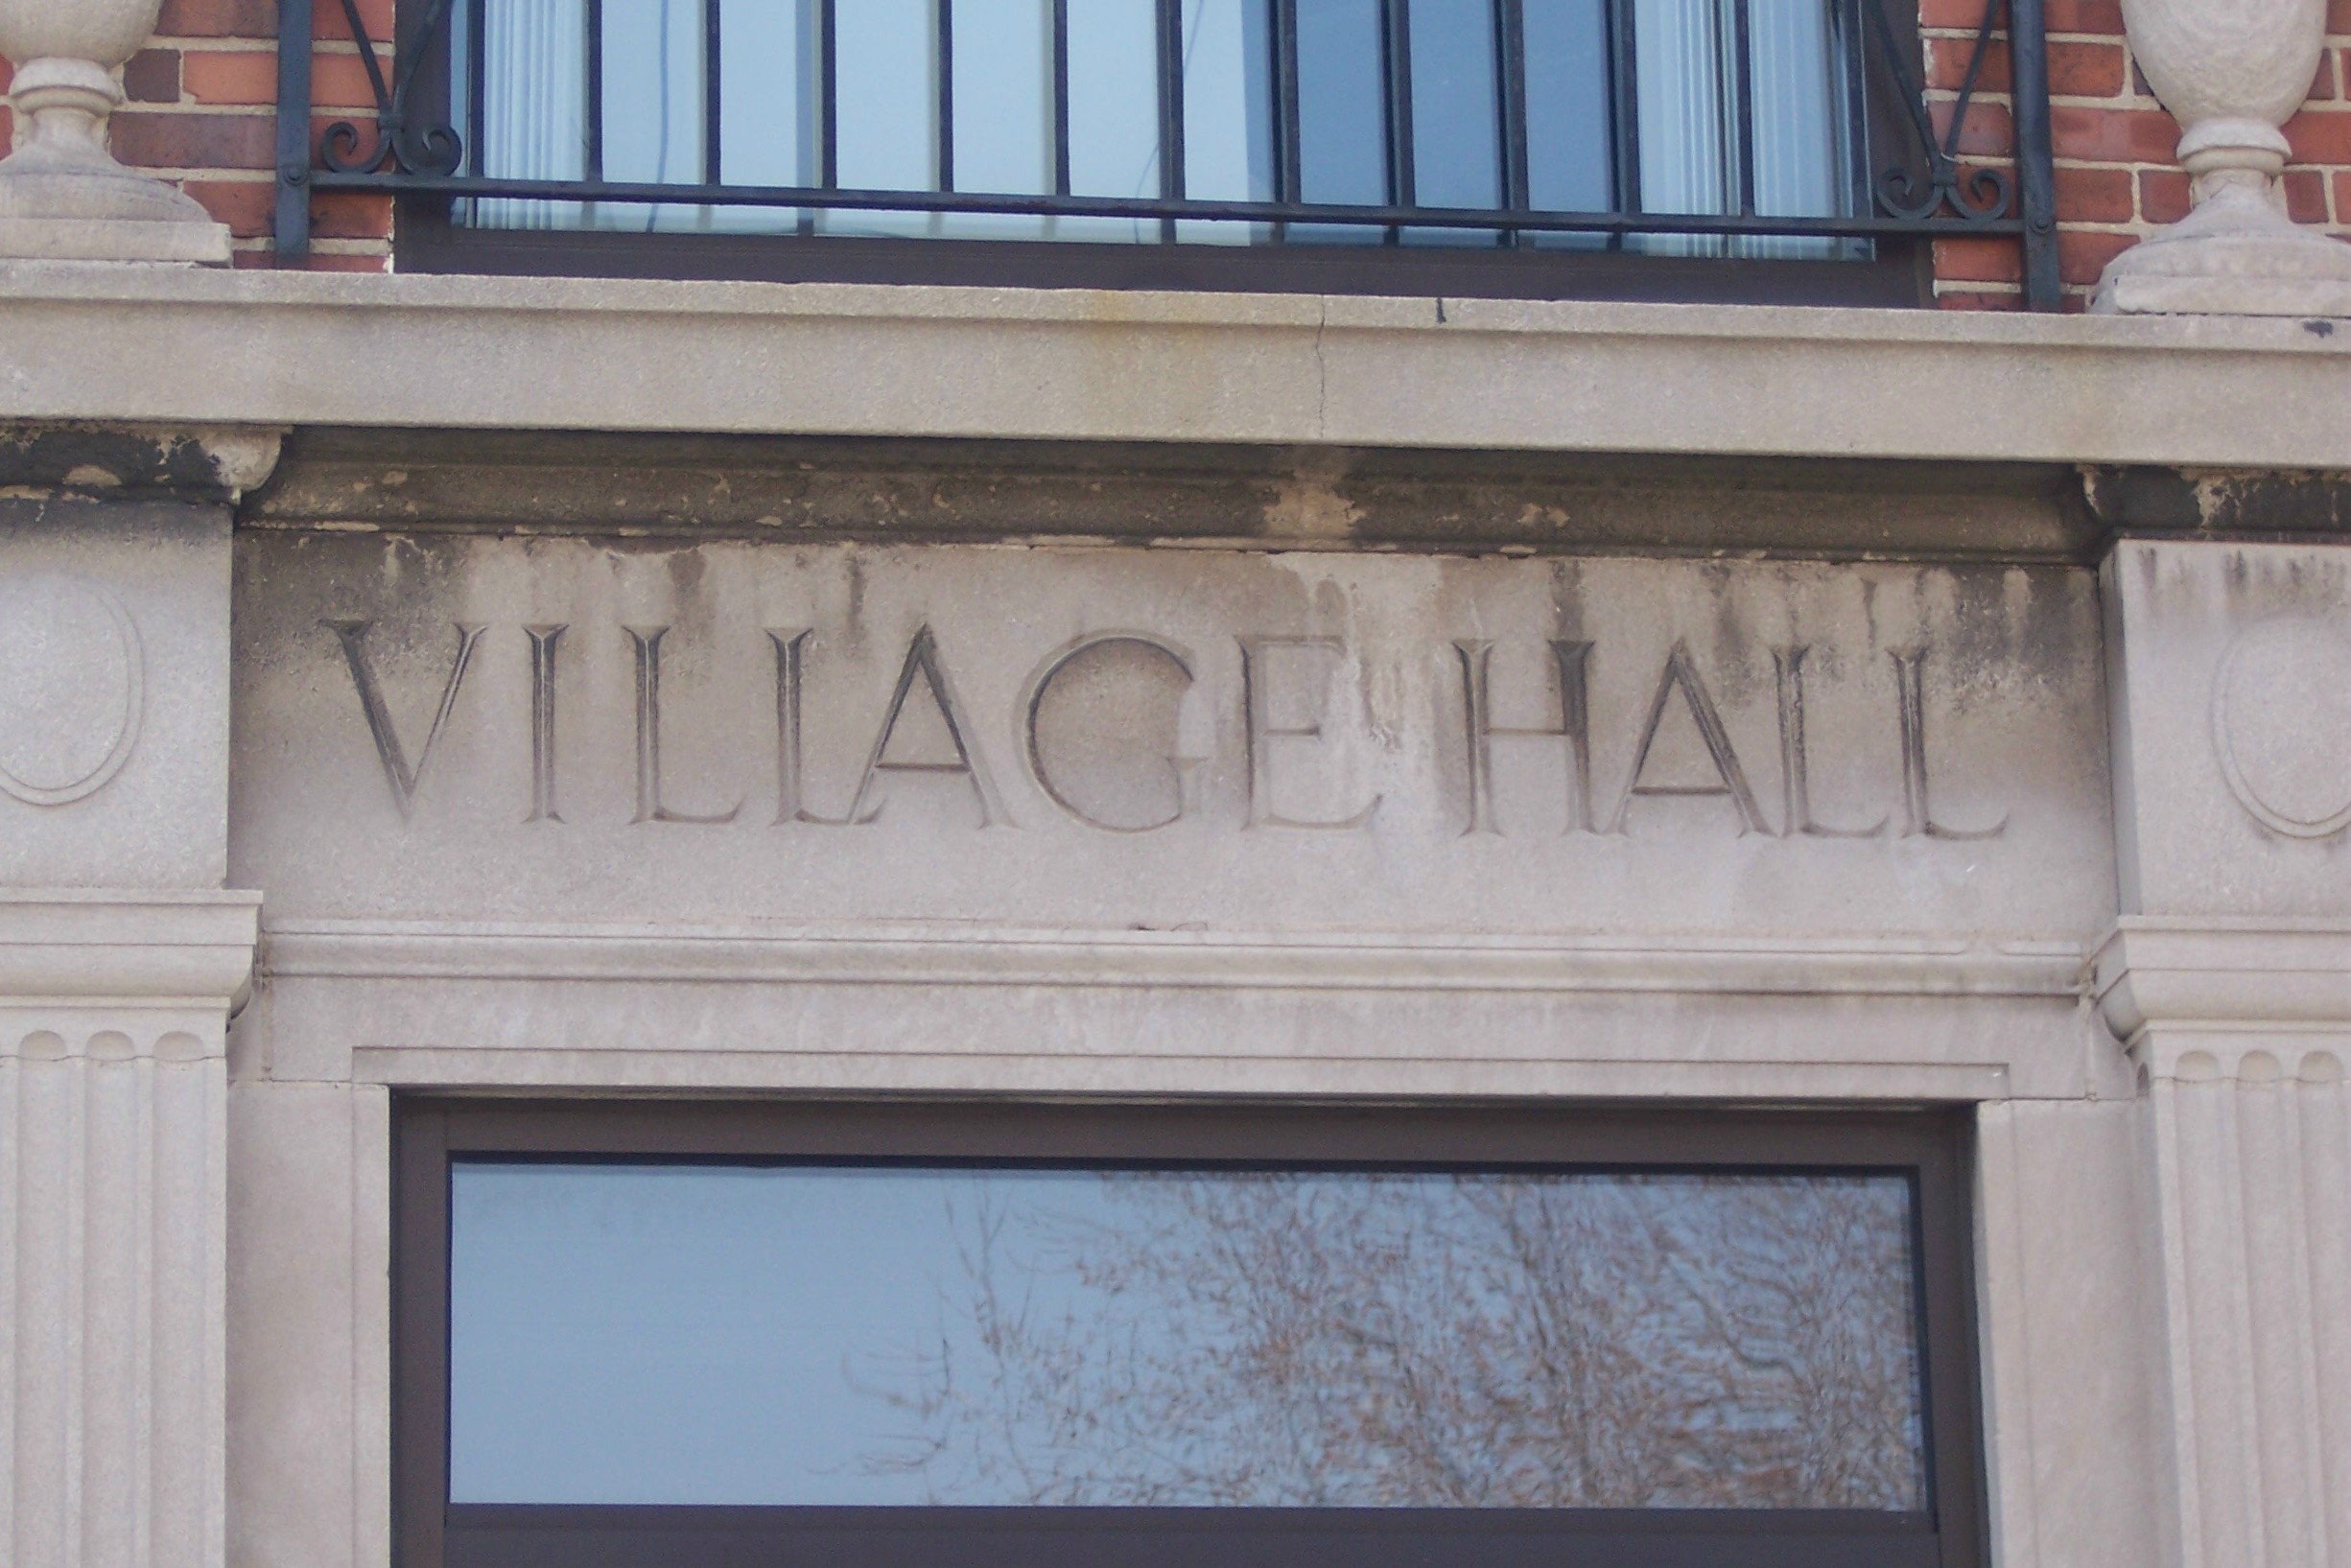 Village Hall 1 – Village of West Milwaukee